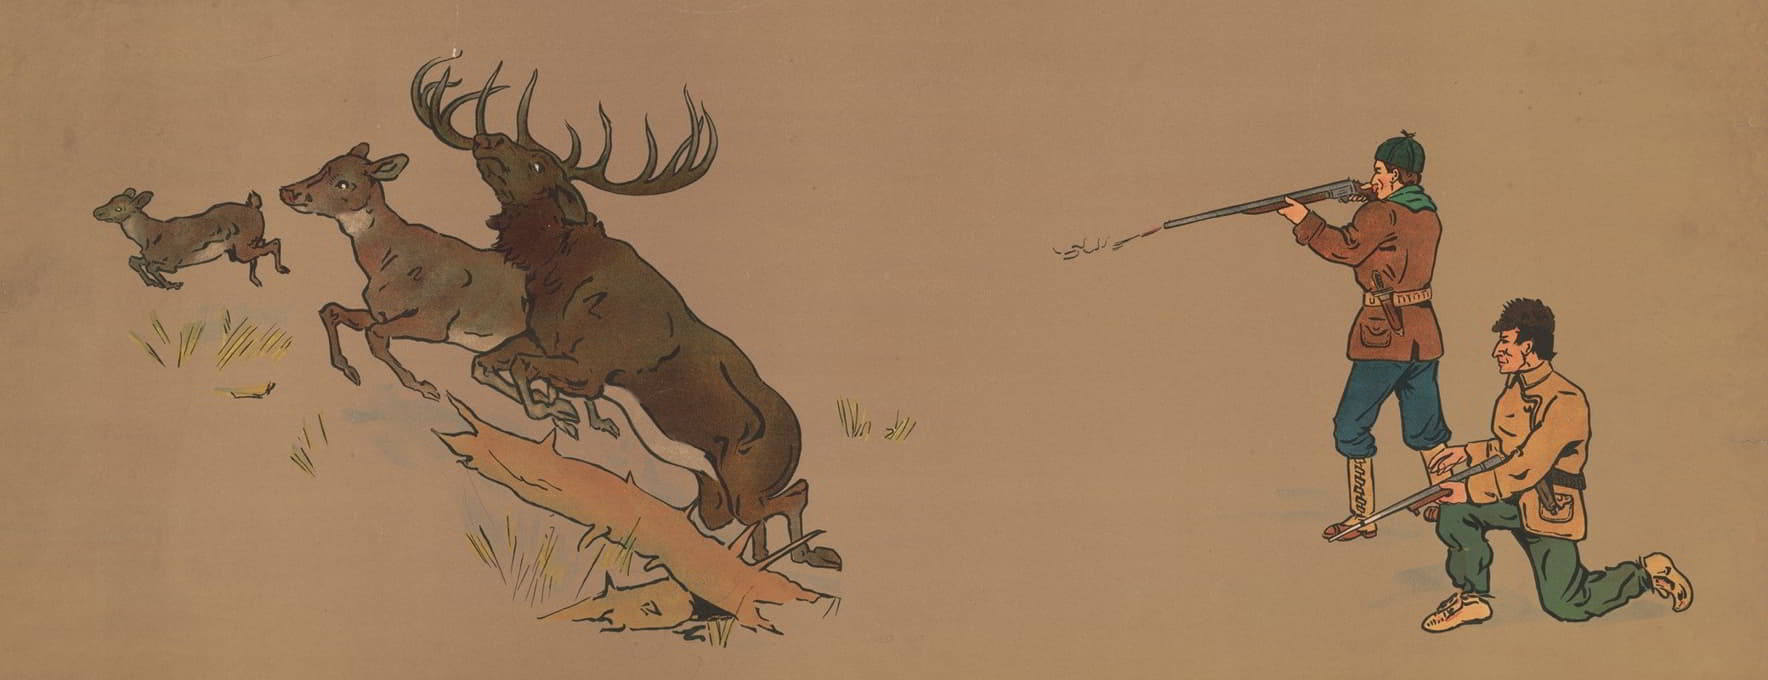 George Markendorff - Deer hunt